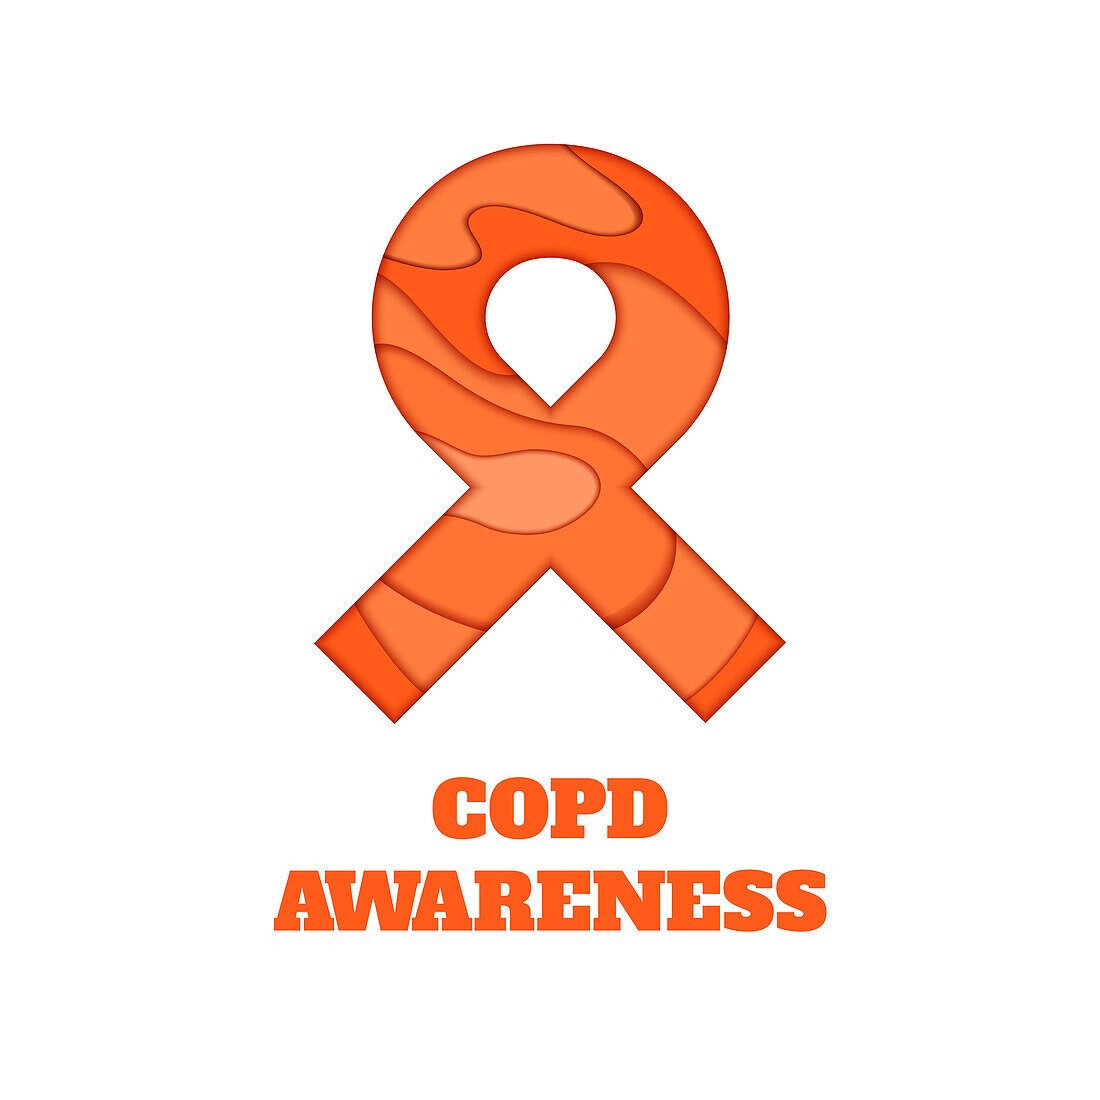 COPD awareness, illustration